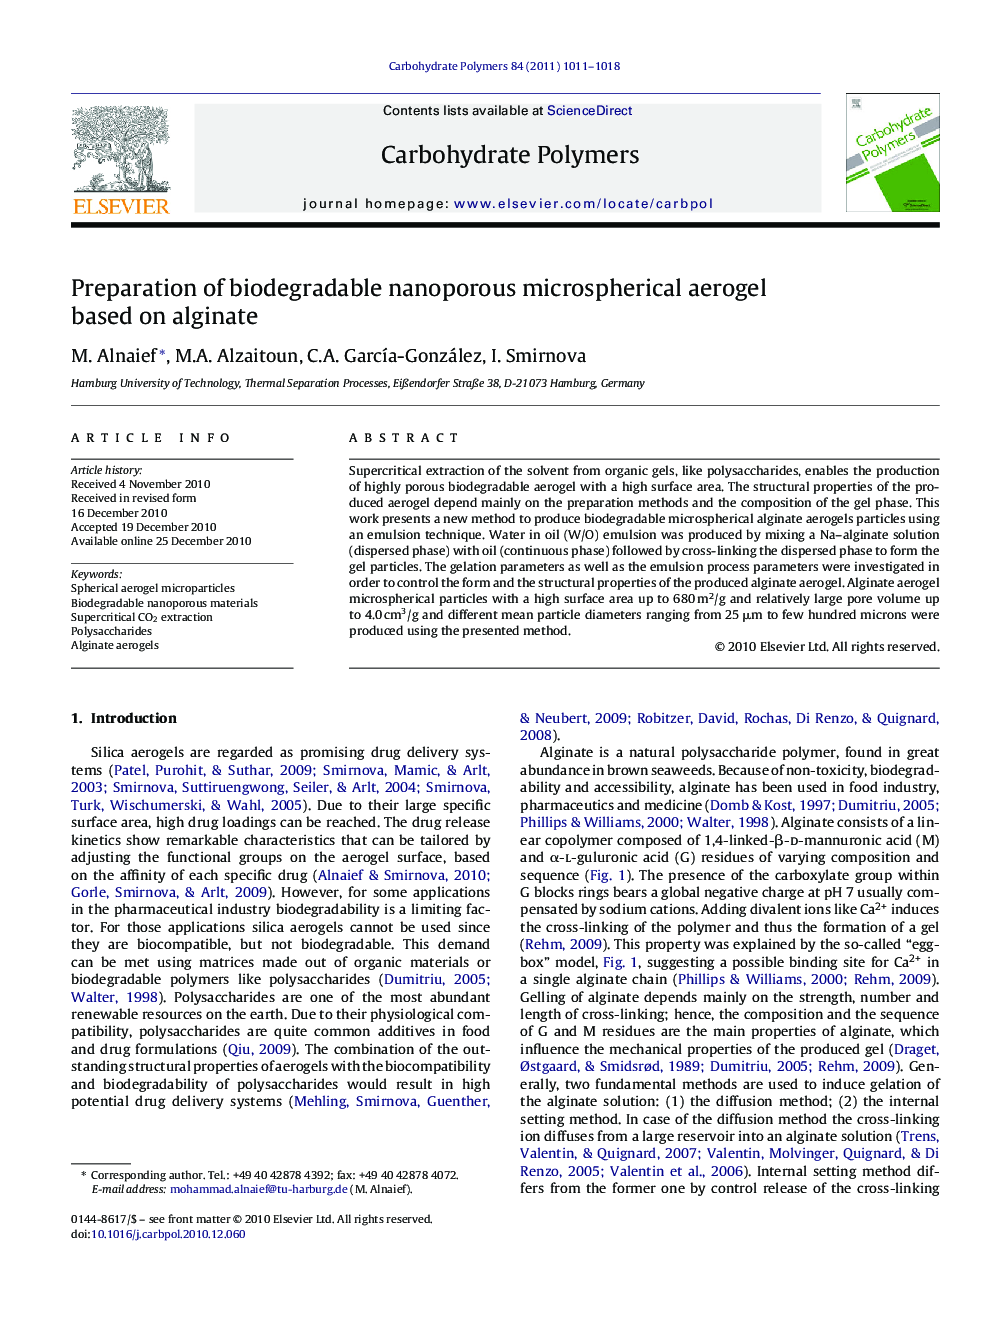 Preparation of biodegradable nanoporous microspherical aerogel based on alginate